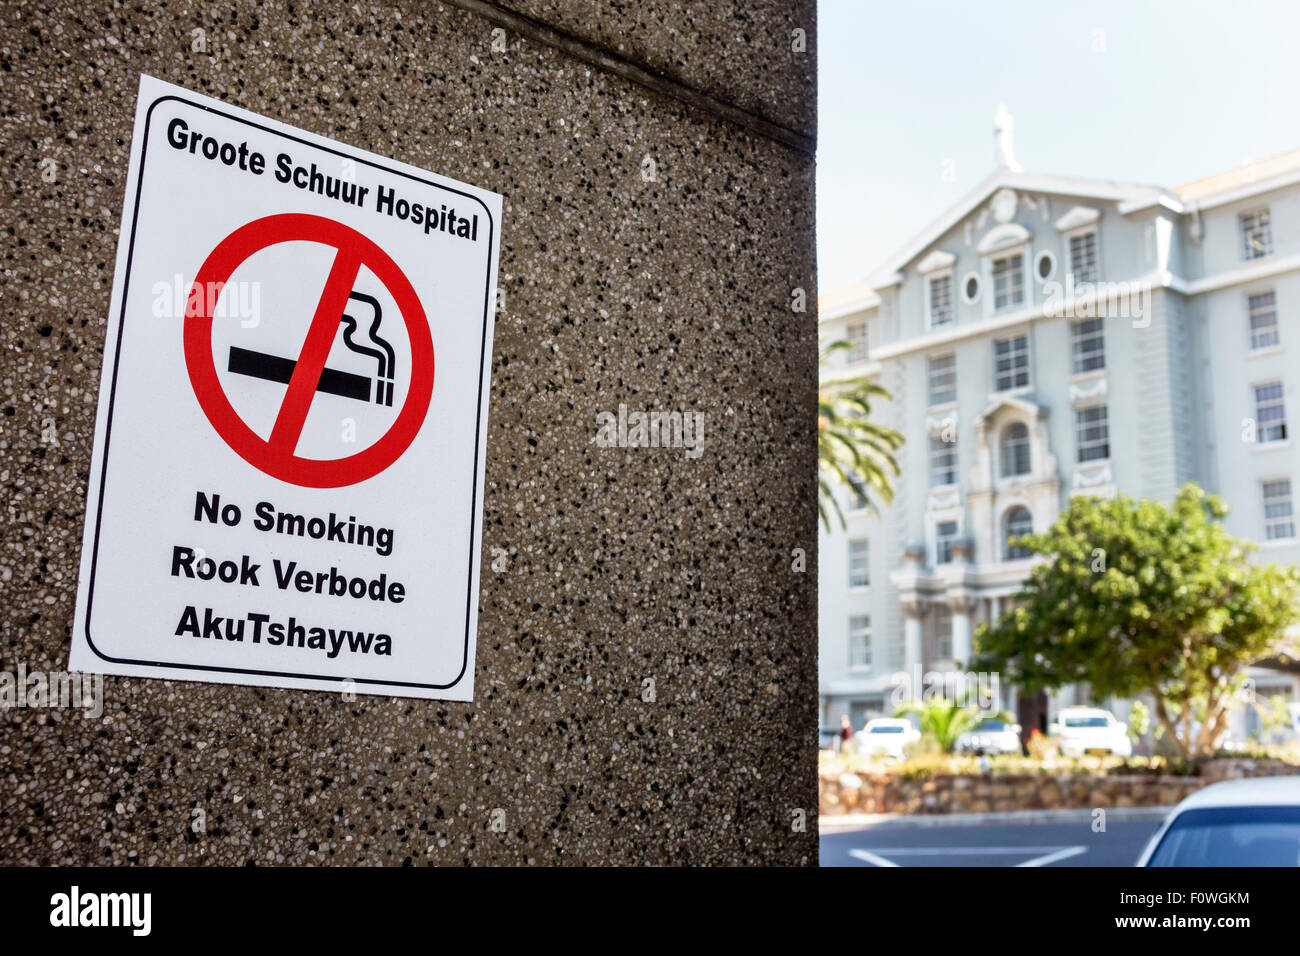 Cape Town South Africa,Salt River,Groote Schuur Hospital,sign,language,English,Afrikaans,Zulu,no smoking,SAfri150311028 Stock Photo